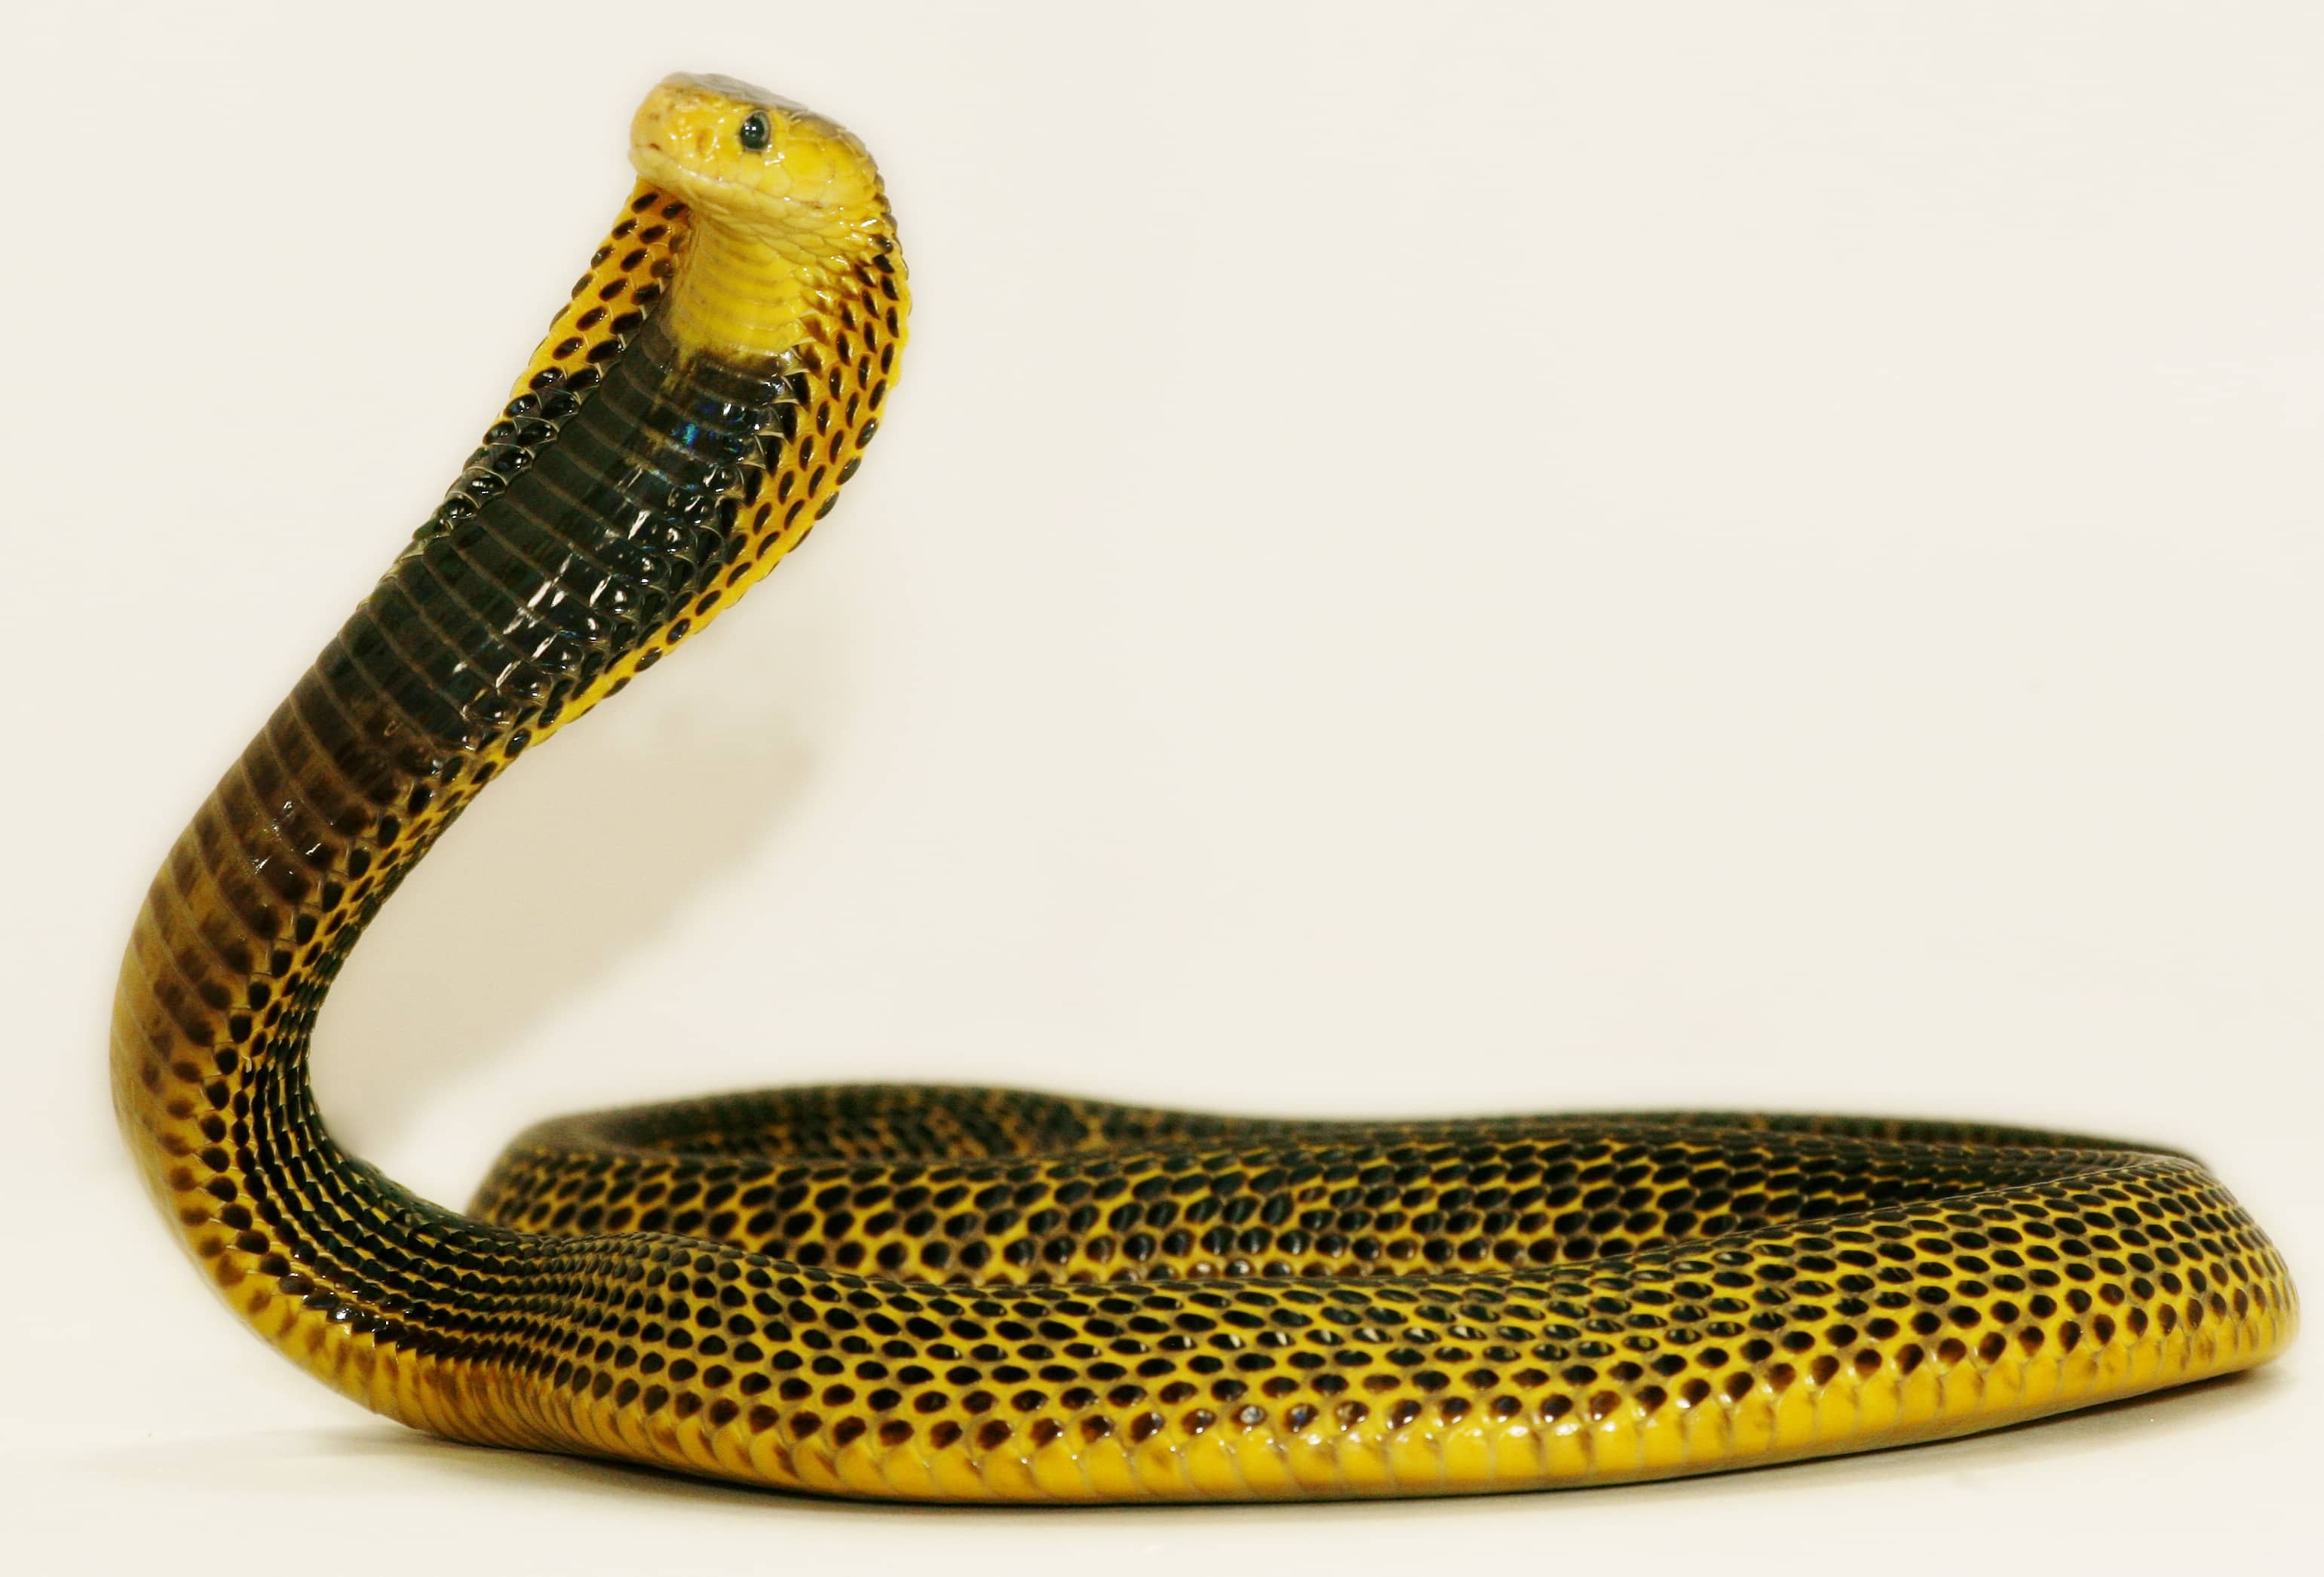 19-astonishing-facts-about-samar-cobra